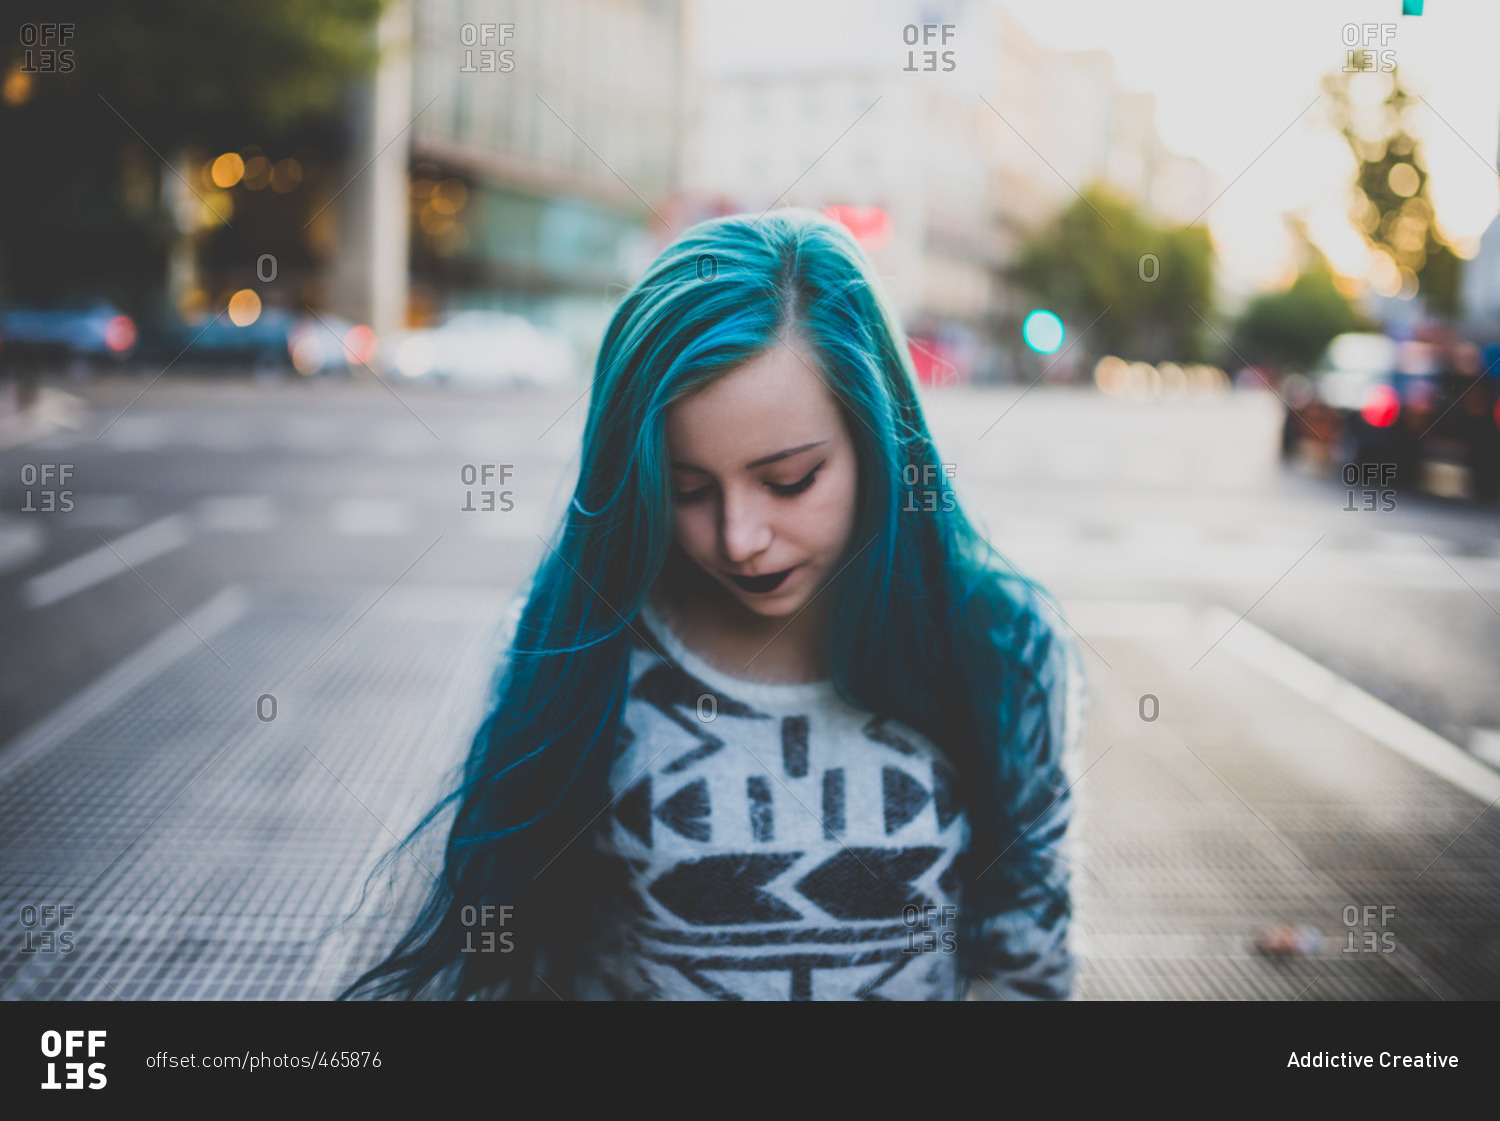 Sad punk girl with blue hair walking on a city street